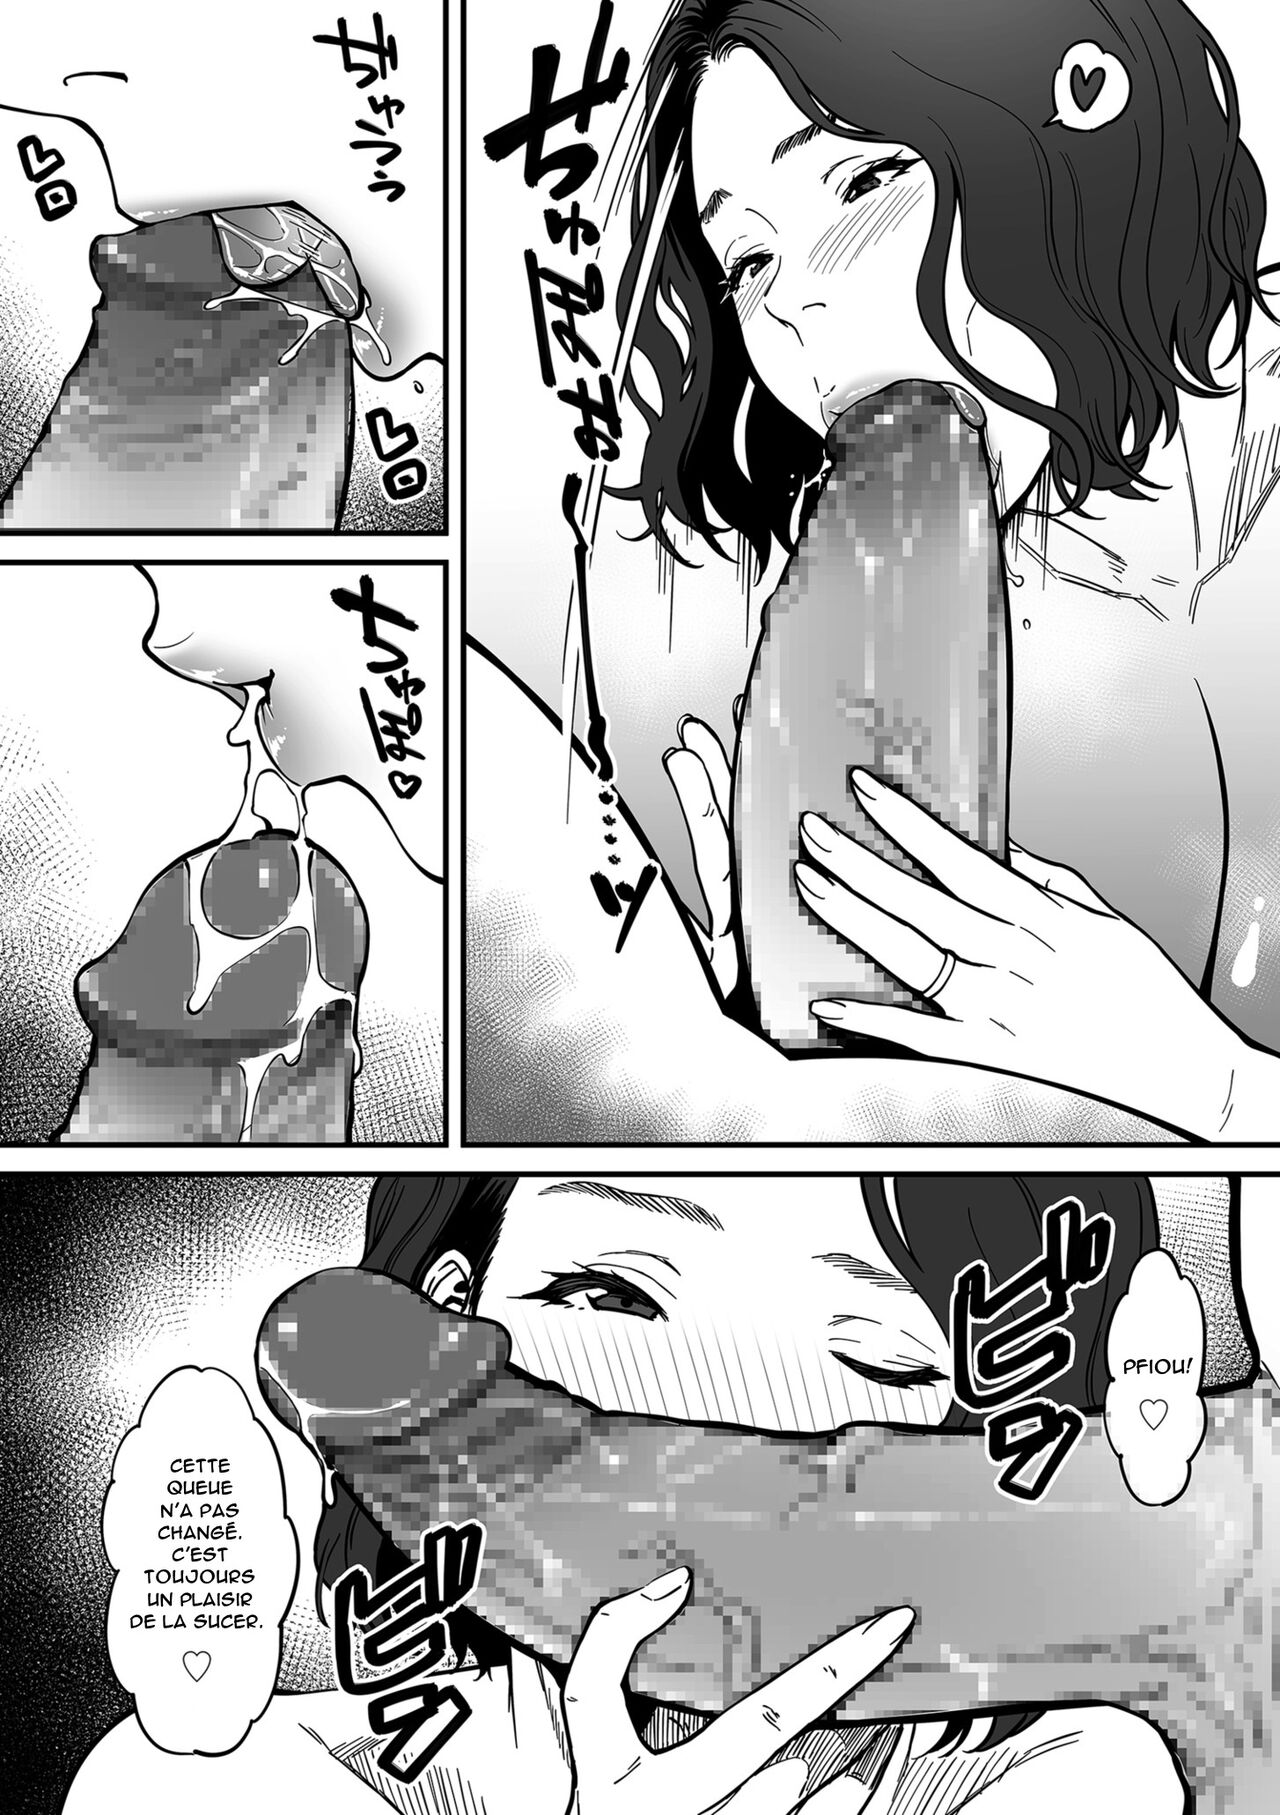 Onna Eromangaka ga Inran da nante Gensou ja nai?  Is It Not a Fantasy That The Female Erotic Mangaka Is a Pervert? numero d'image 92